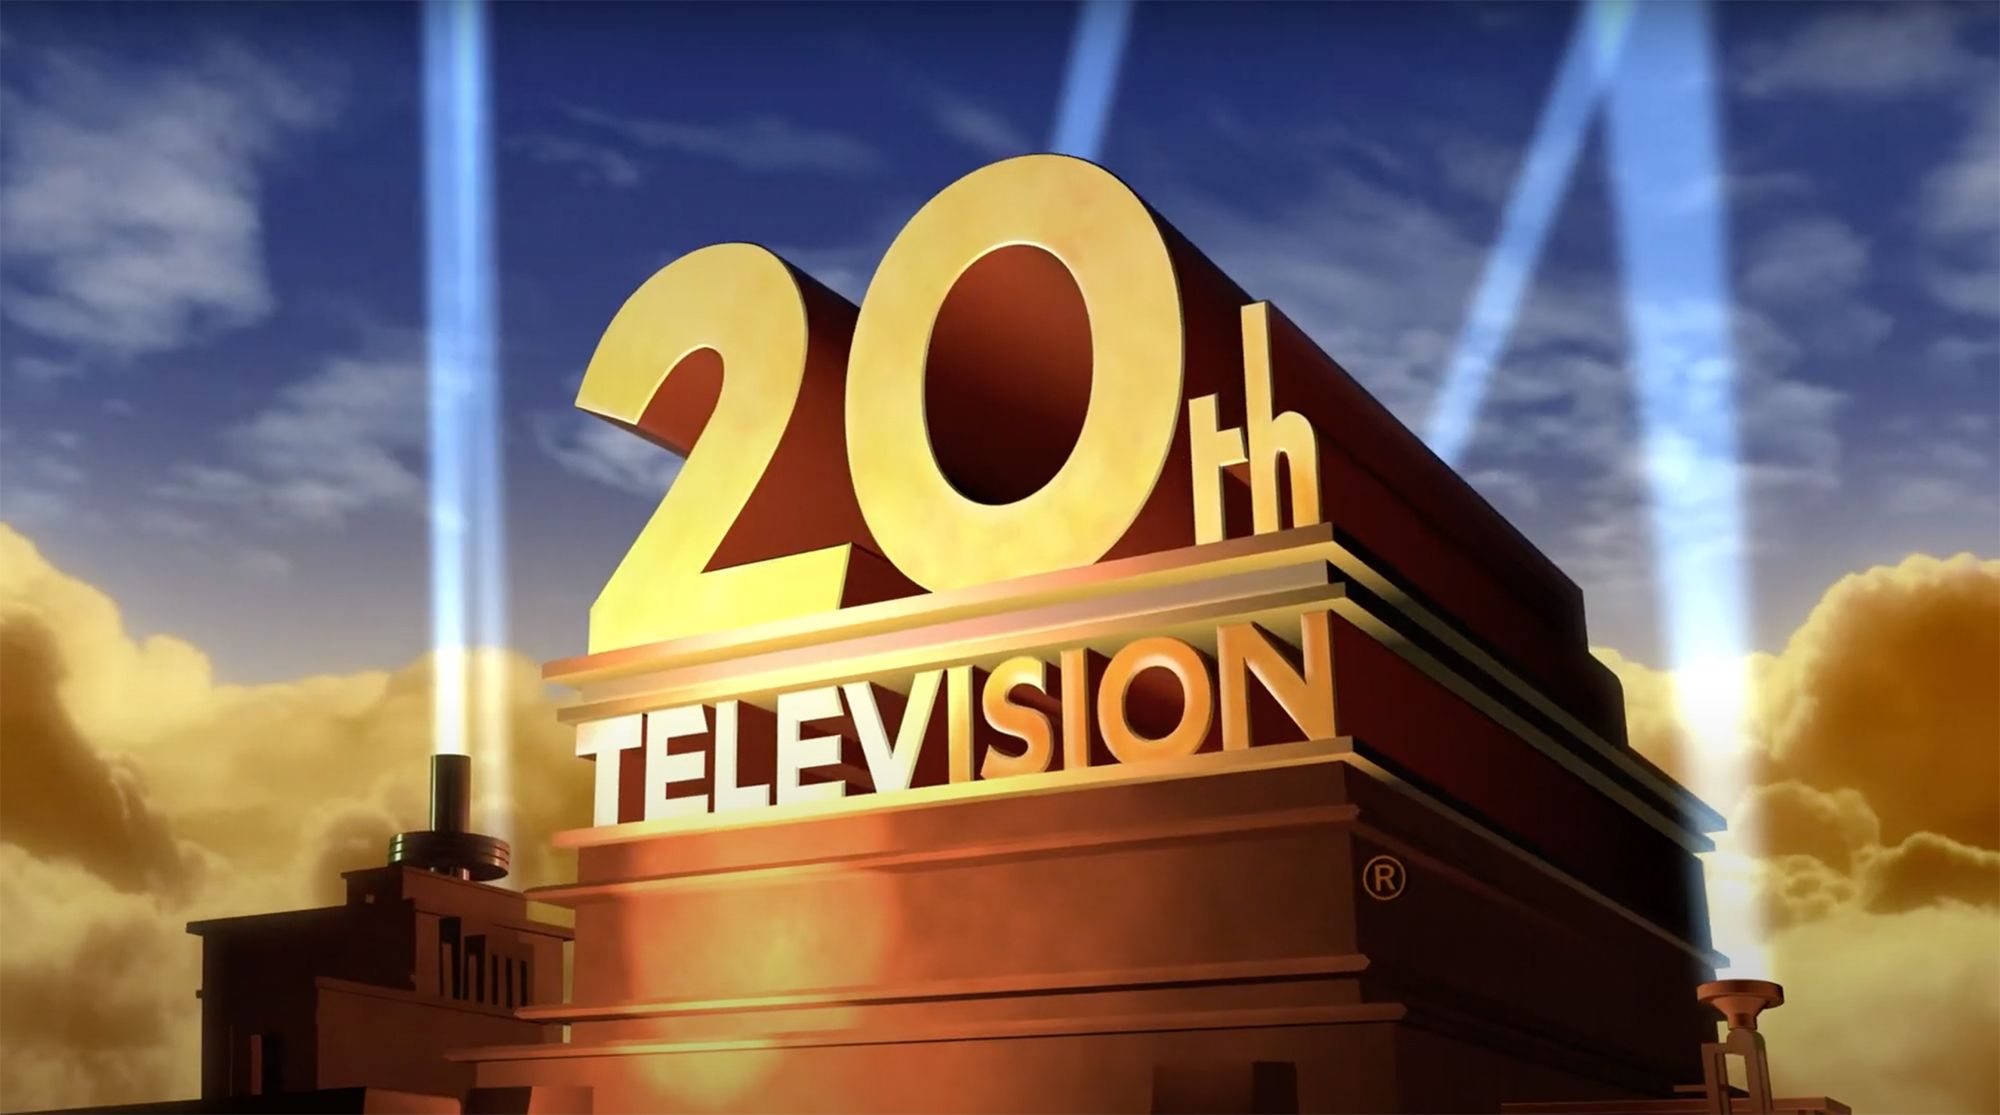 The 20th Century Fox logo transitions into the Cartoon Network logo 